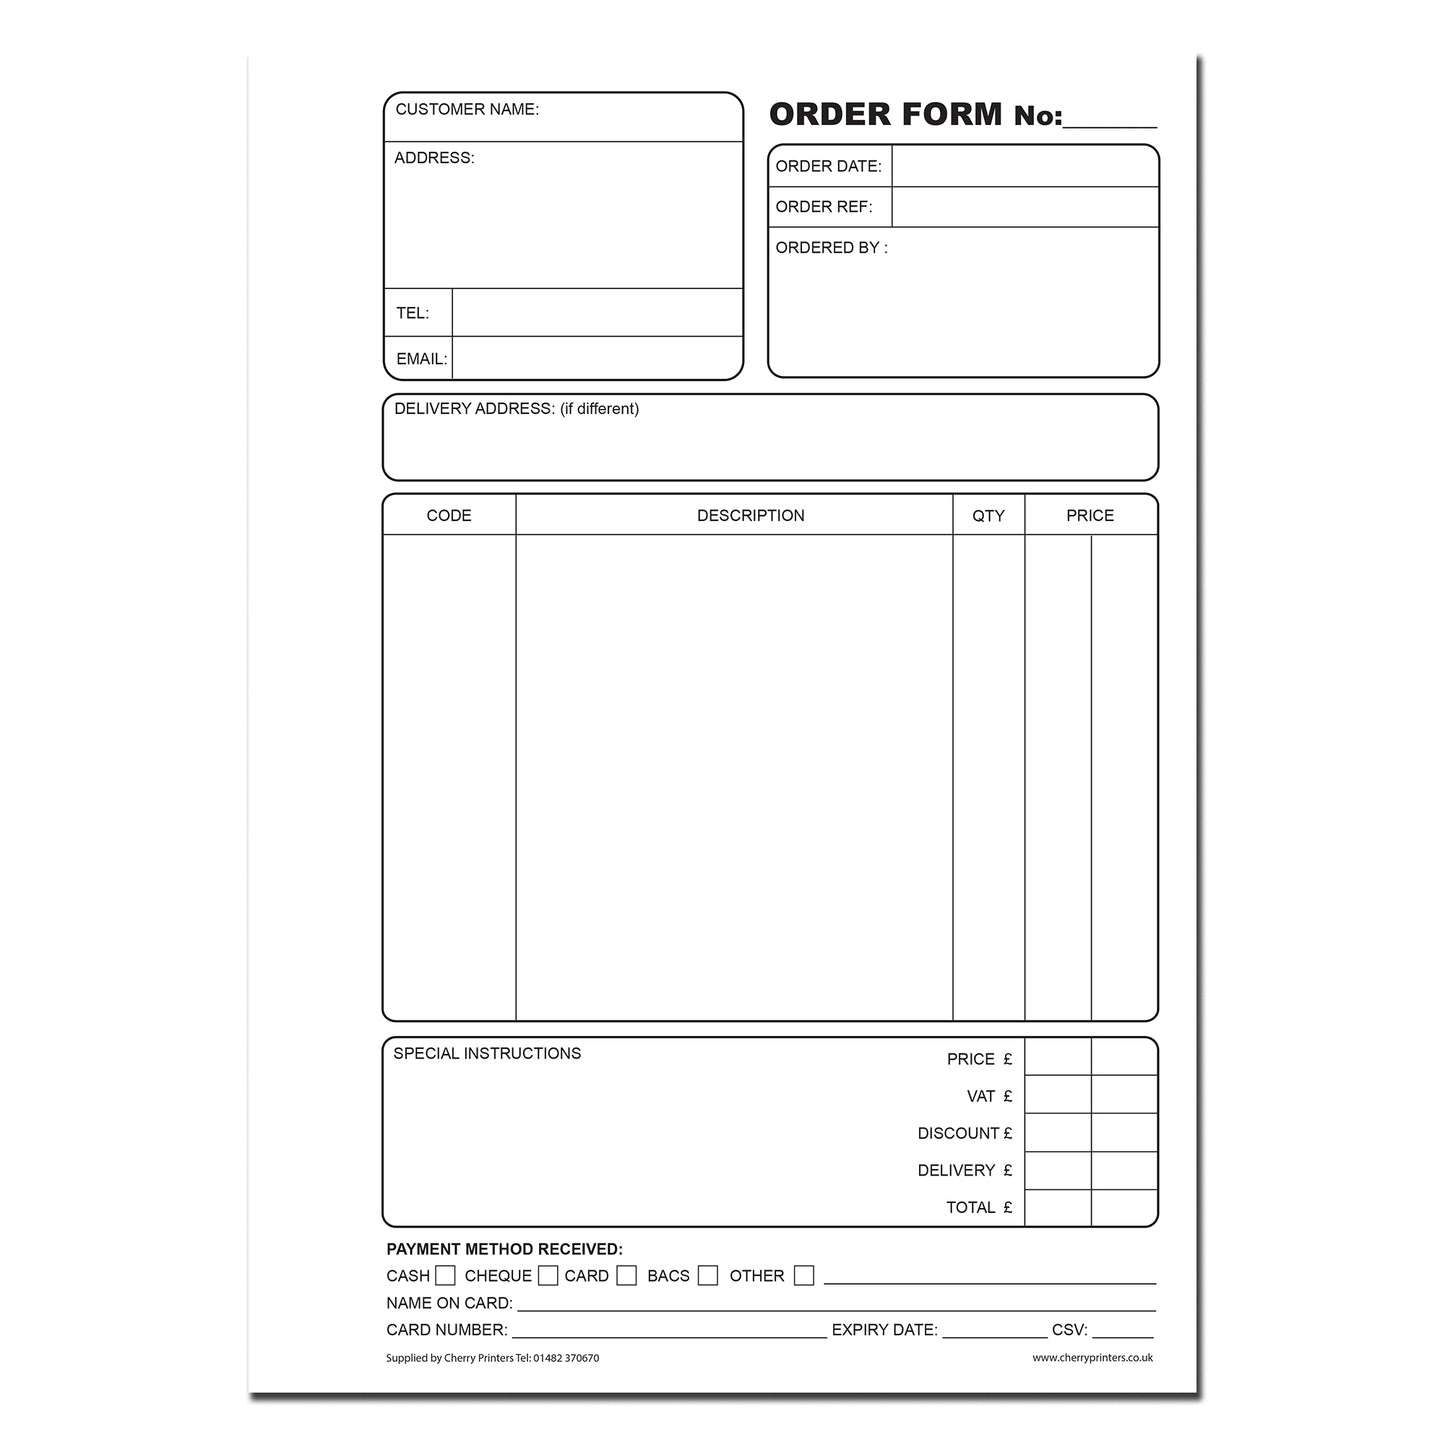 NCR Order Form Triplicate Book A4